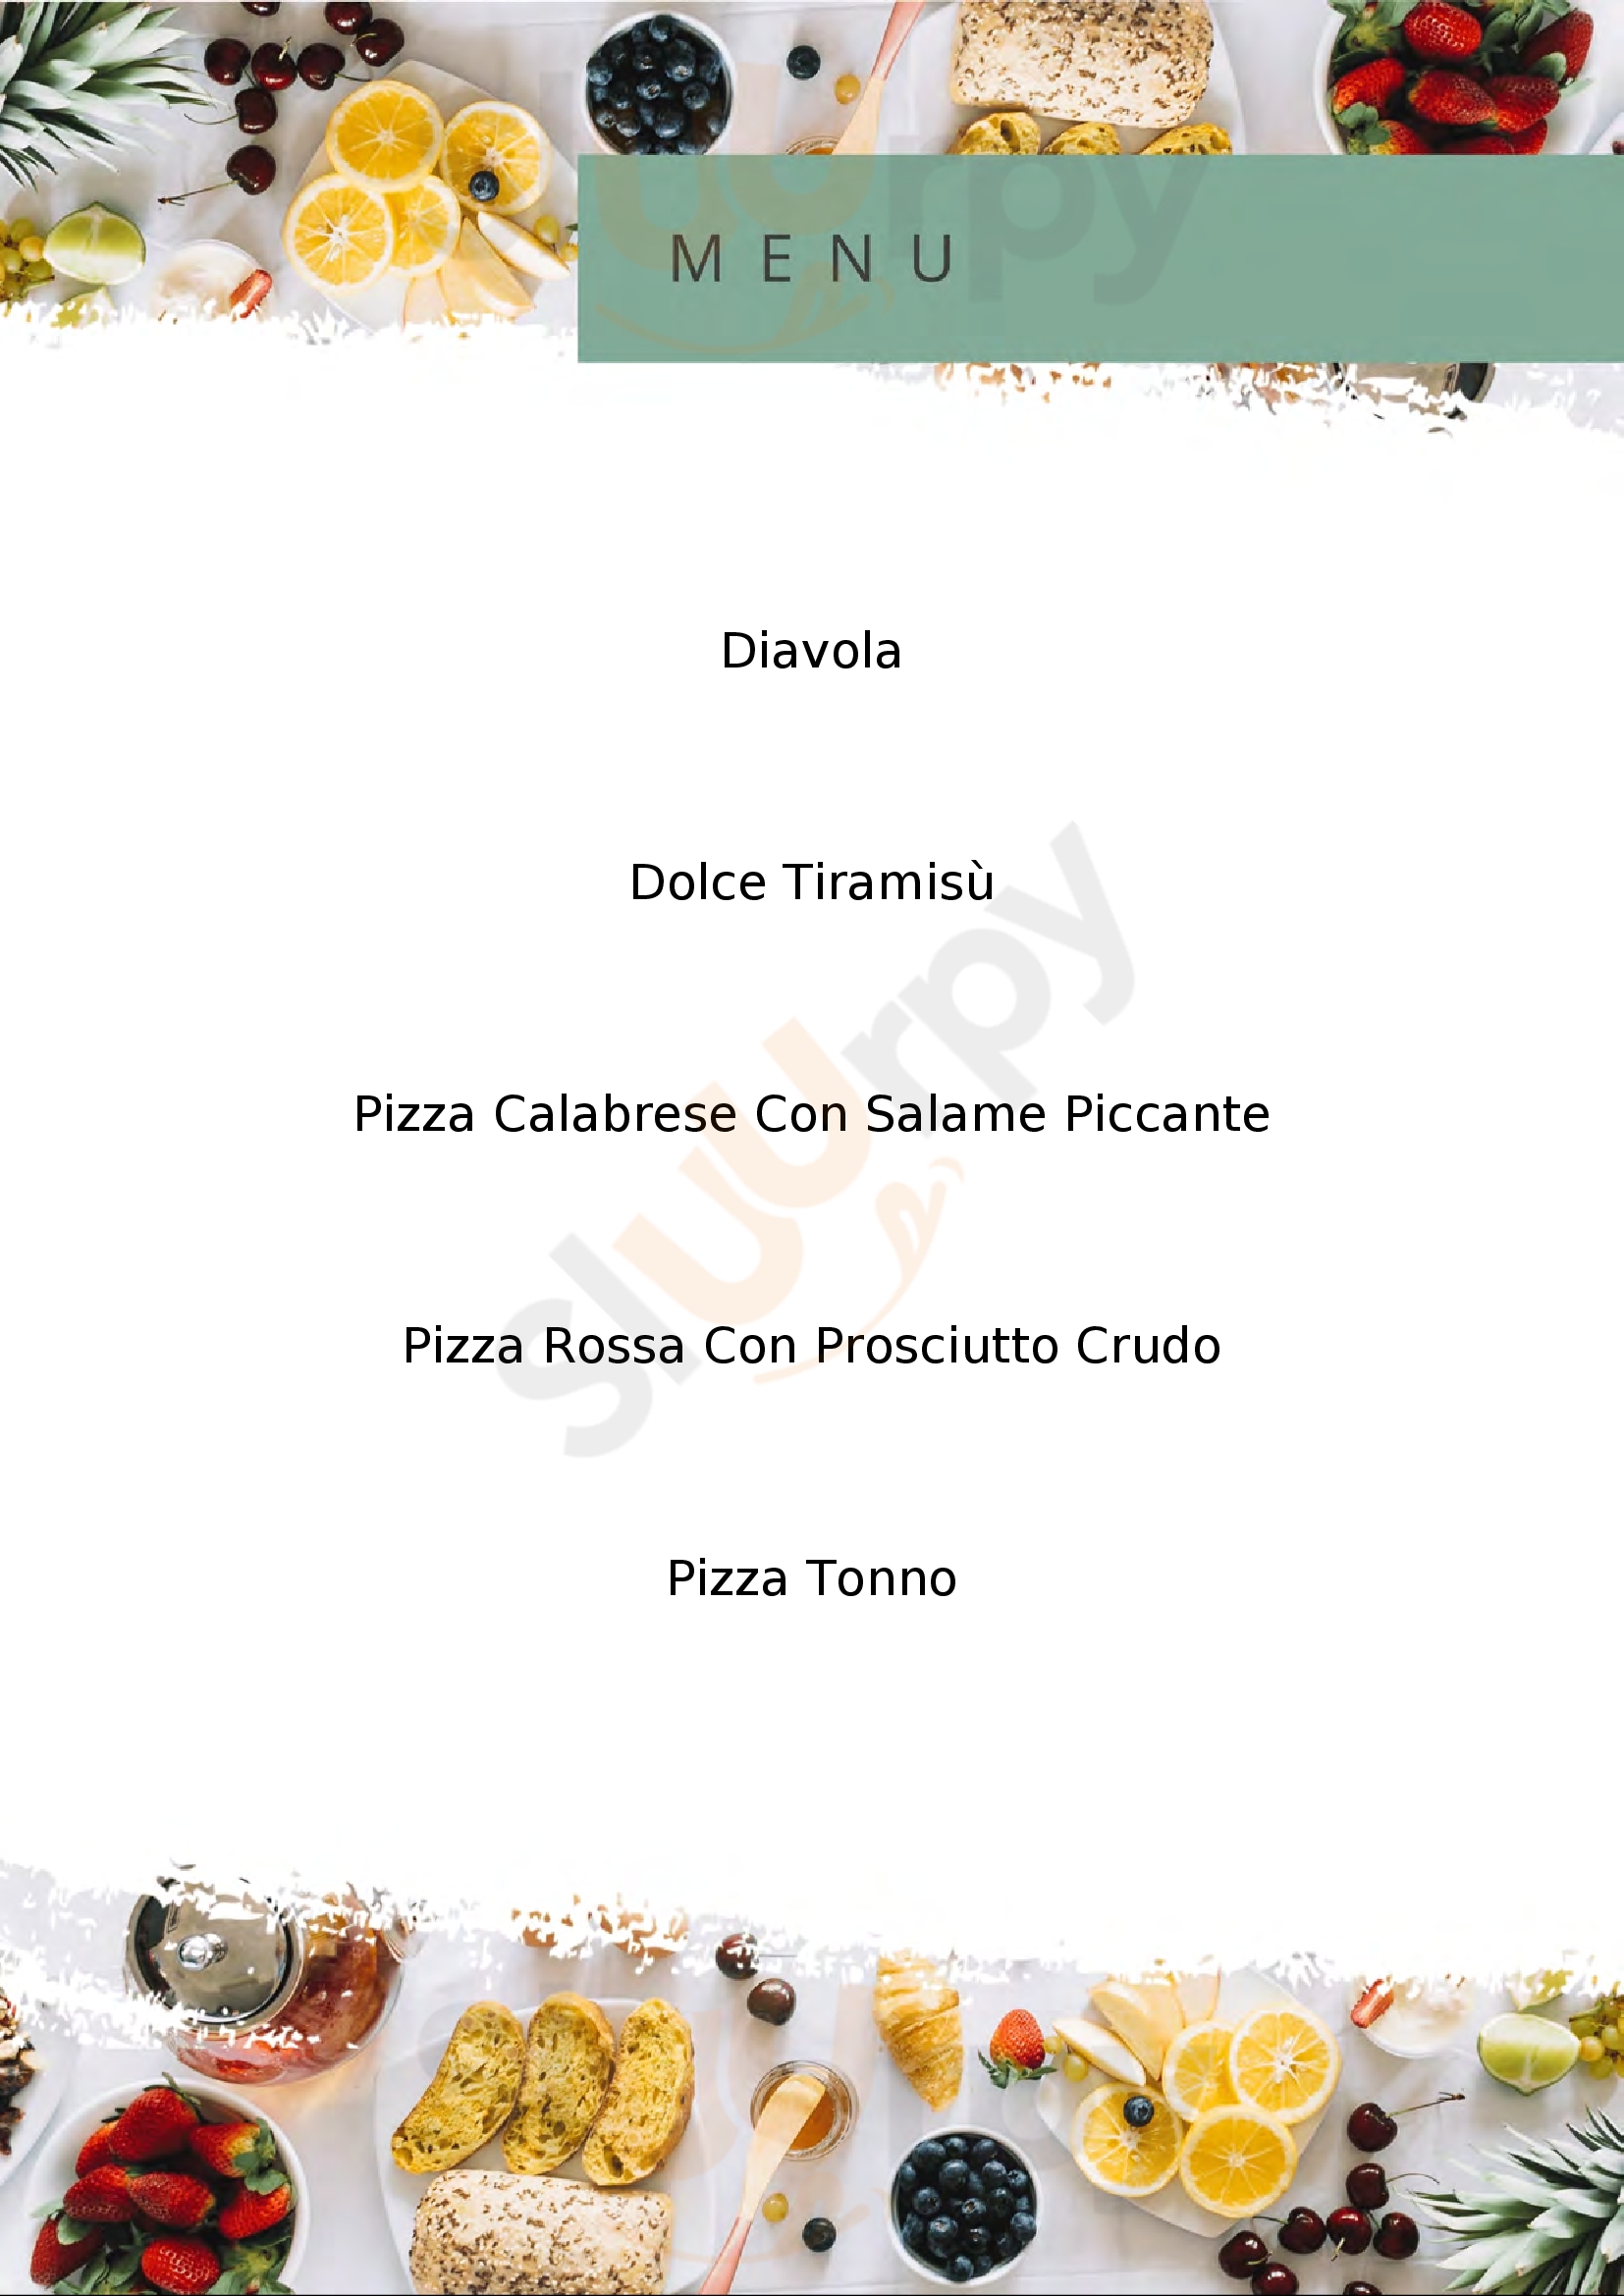 Le Due Sorelle Pizzeria Napoletana Pisa menù 1 pagina